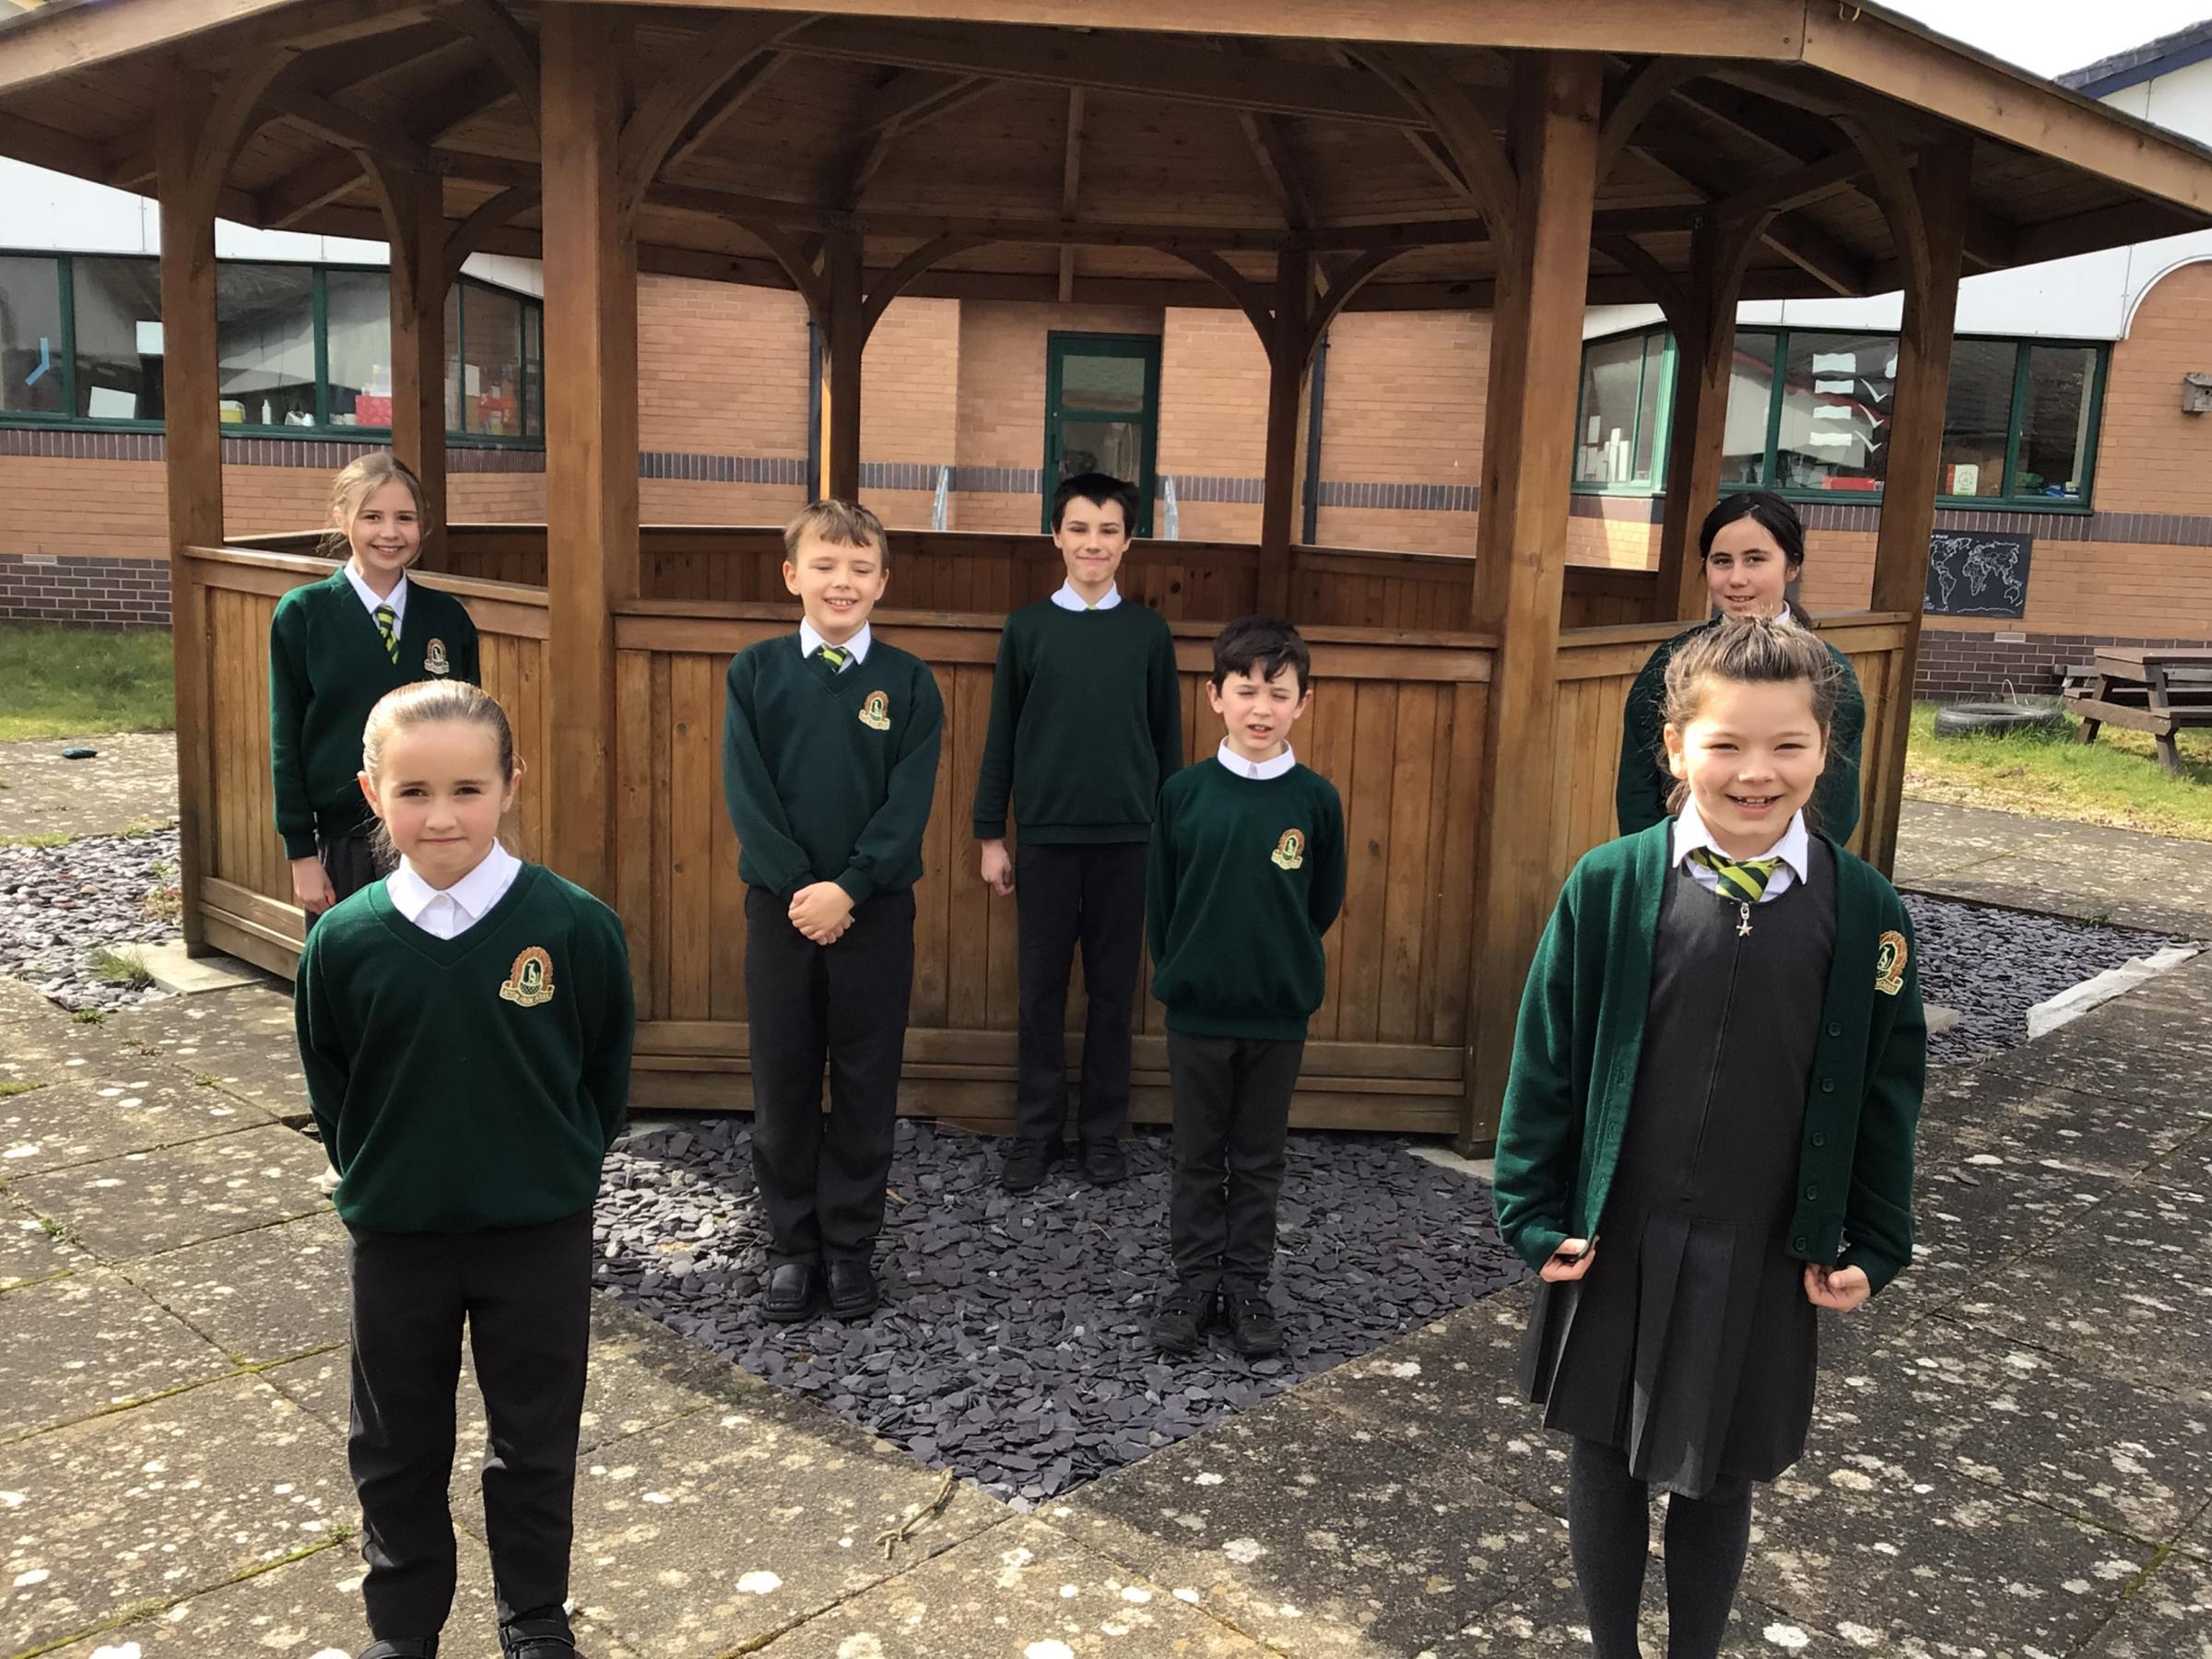 Members of the Criw Cymraeg at Acton Park School.